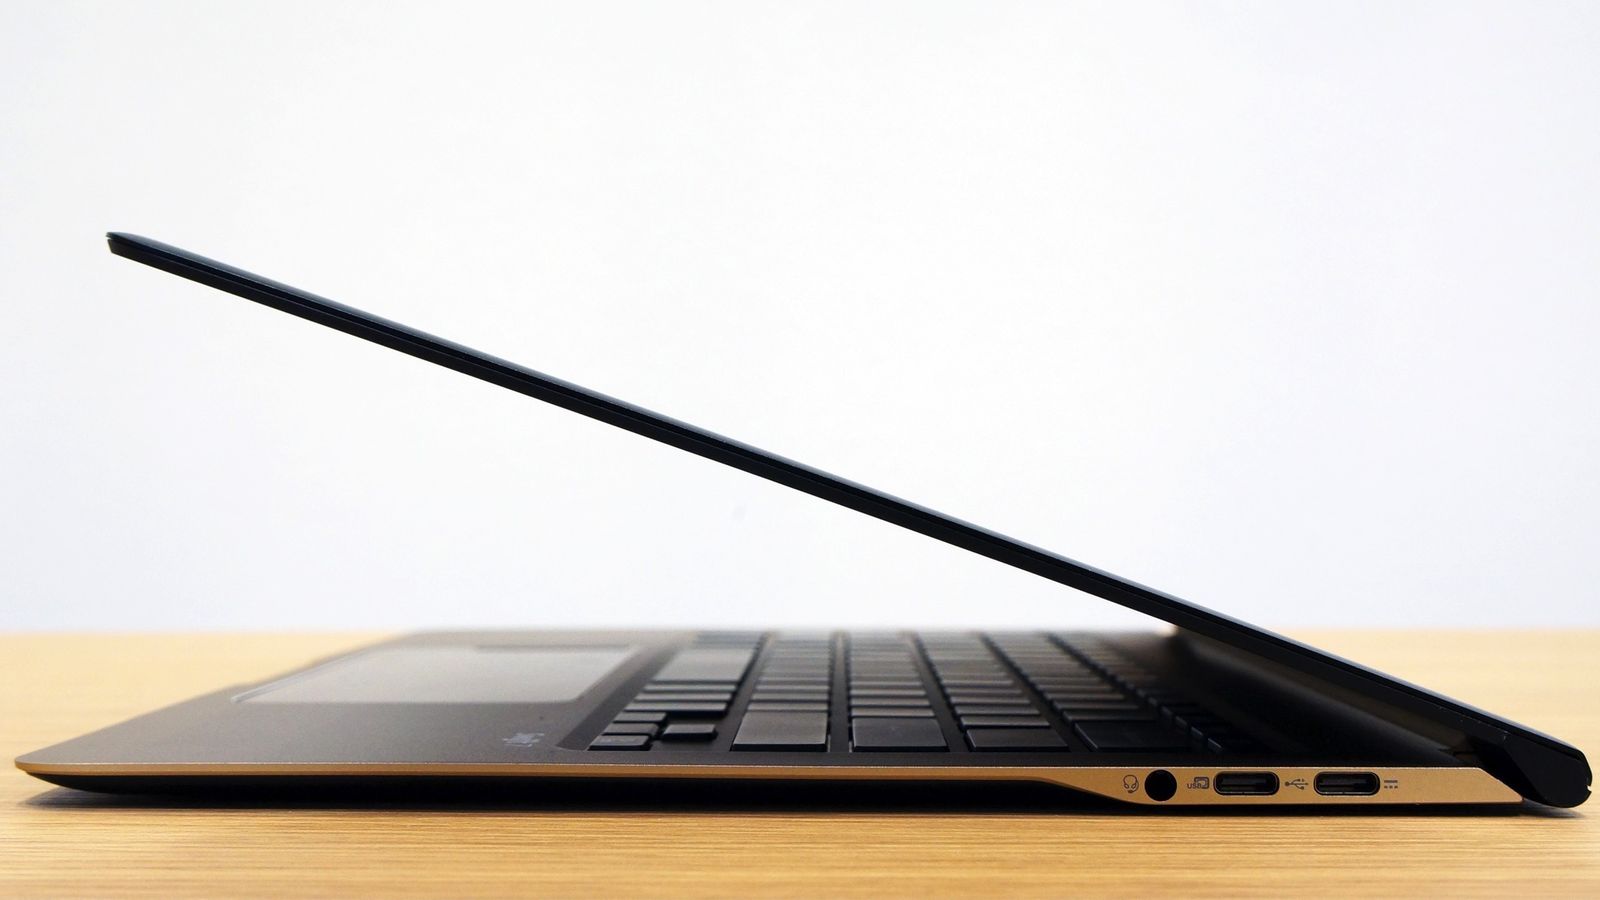 Laptops macbook pro alternatieven man man acer swift